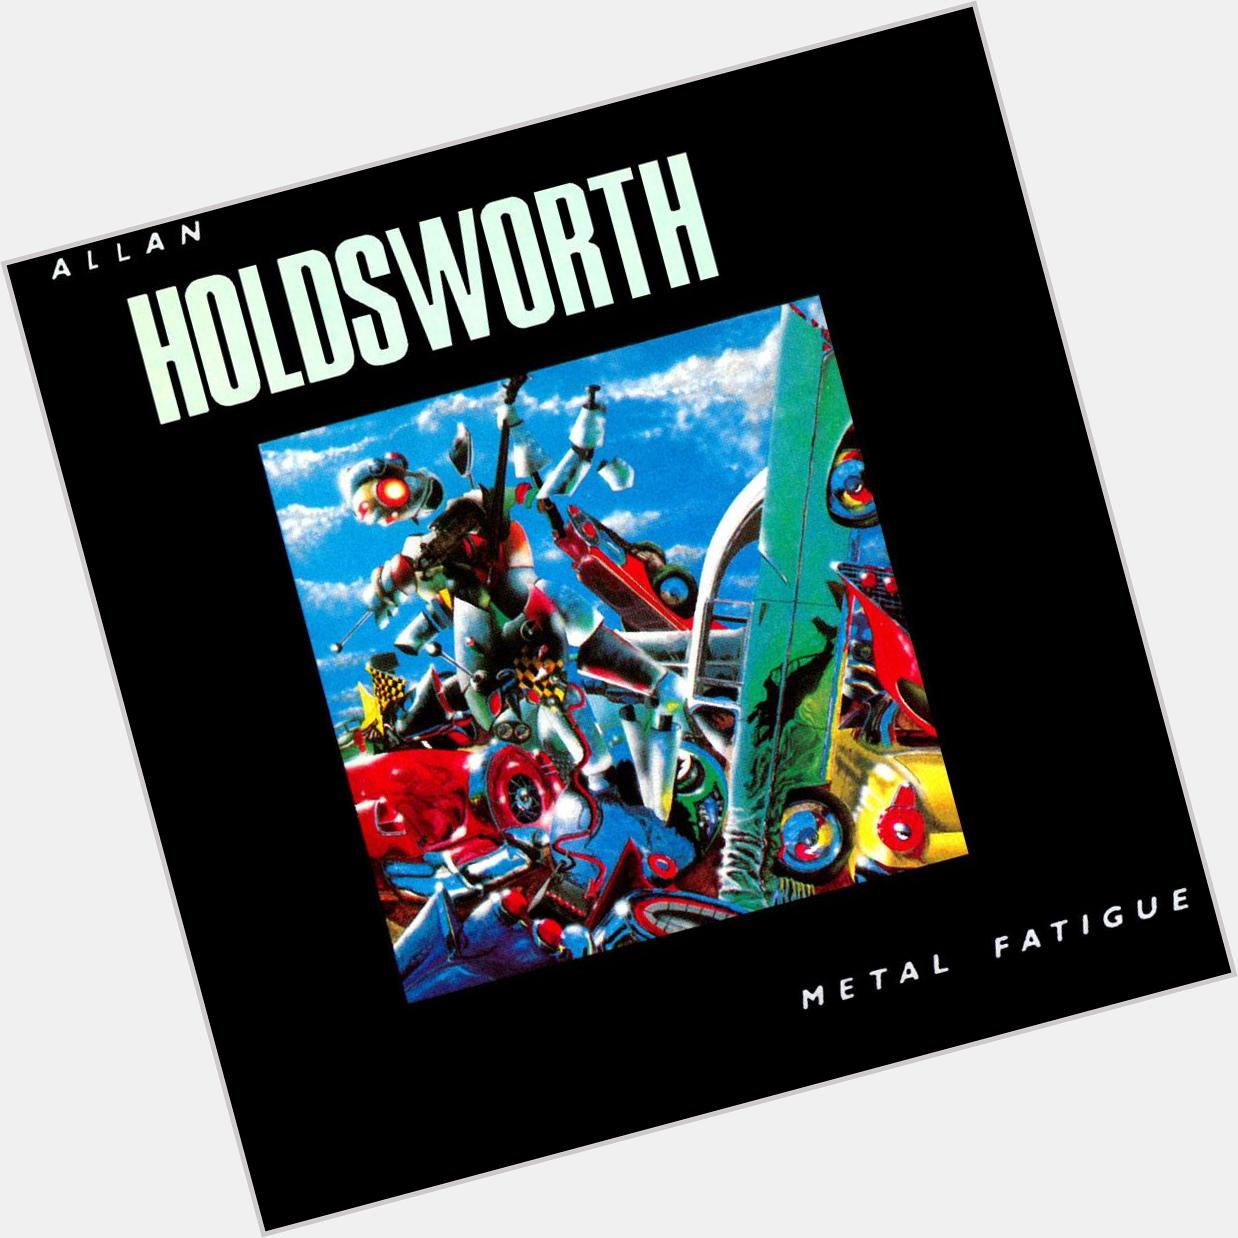  Happy Birthday to Allan Holdsworth, born today in 1946!  